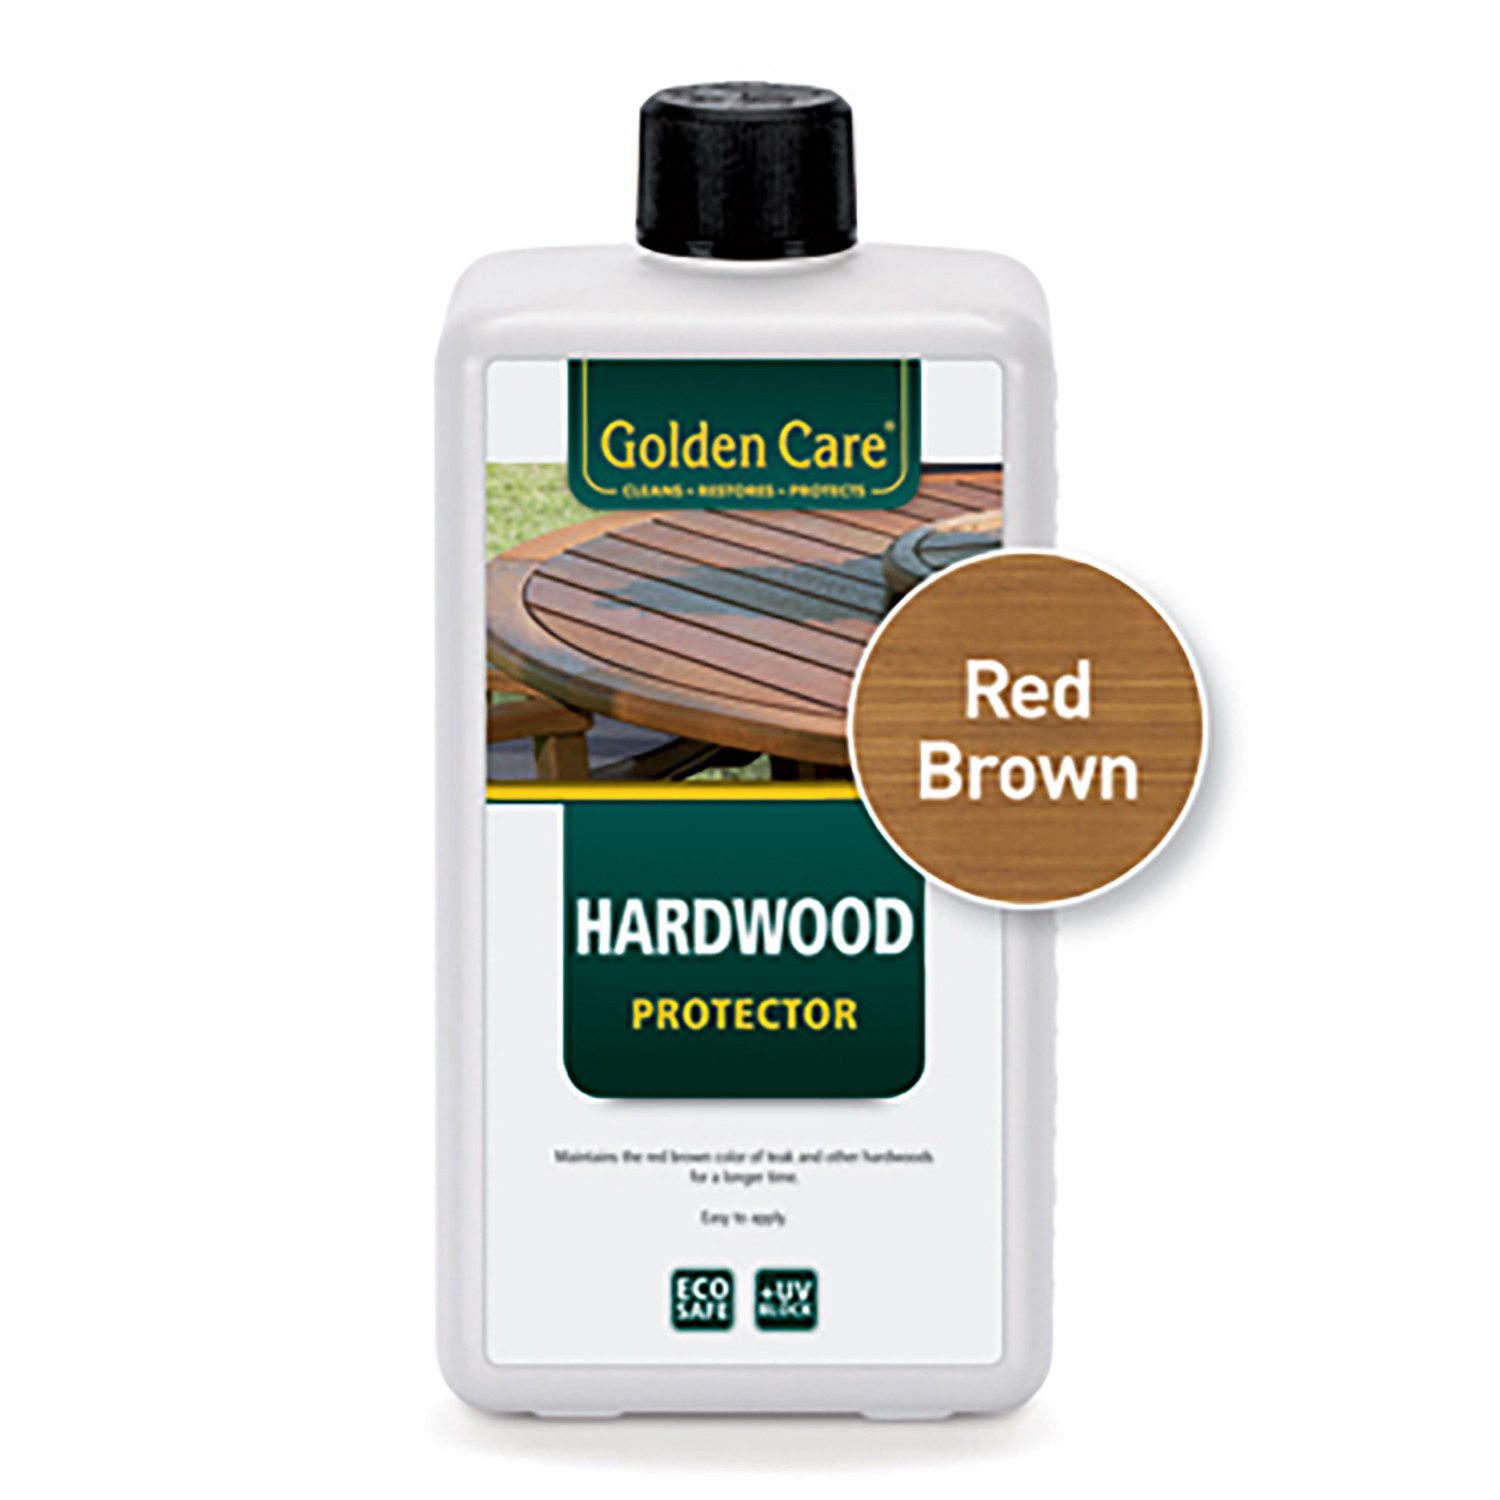 Hardwood Protector red brown